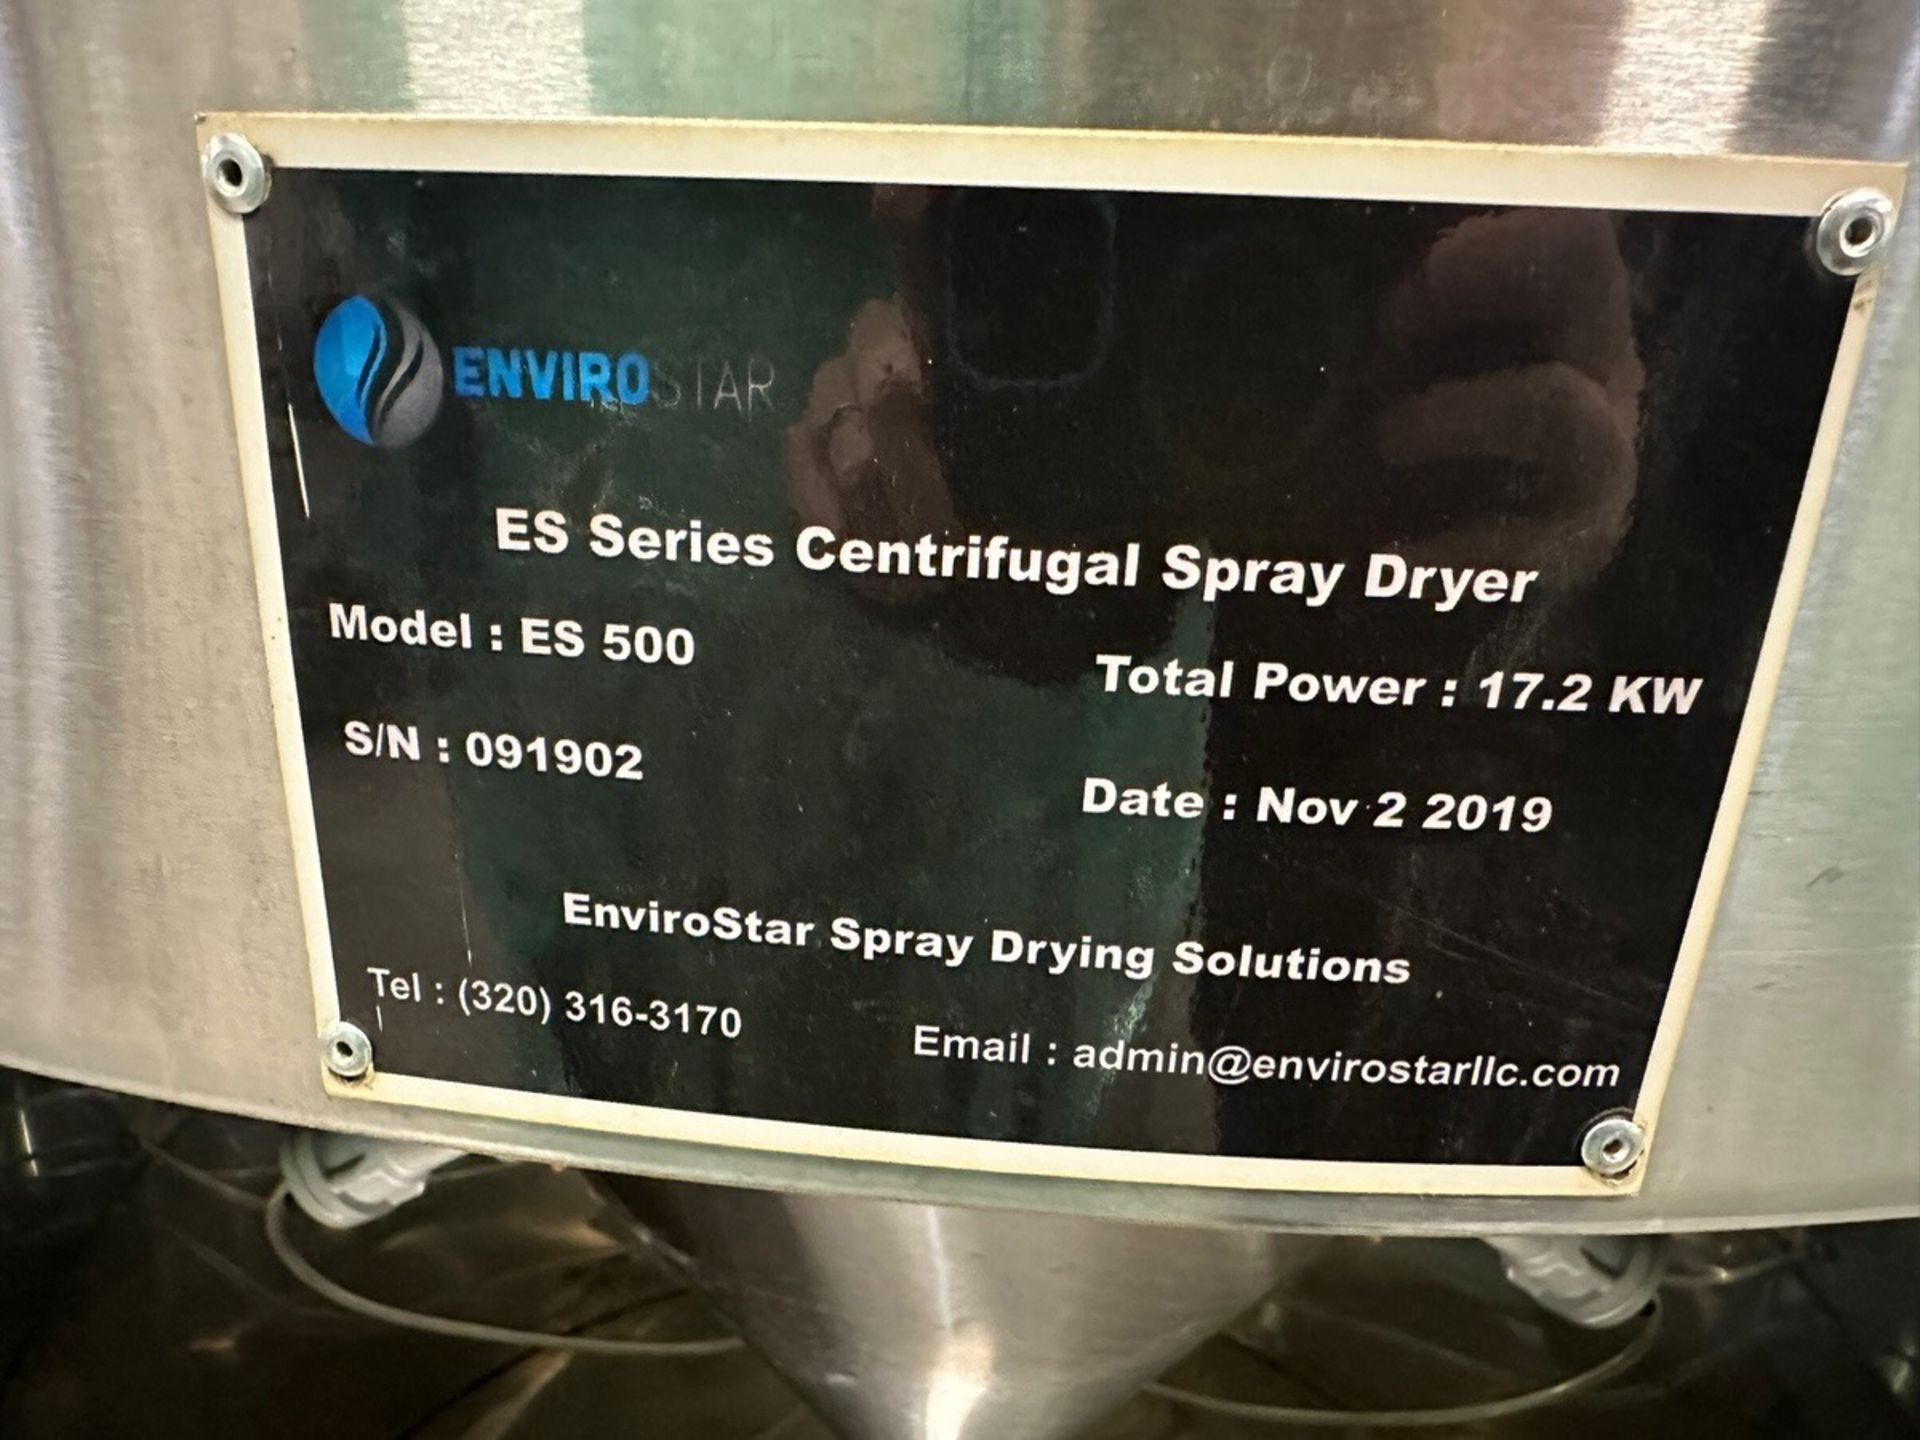 Enviro Star, Es Series Centrifugal Spray Dryer, Model ES, 500, S/N 091902 | Rig Fee $1275 - Image 6 of 6